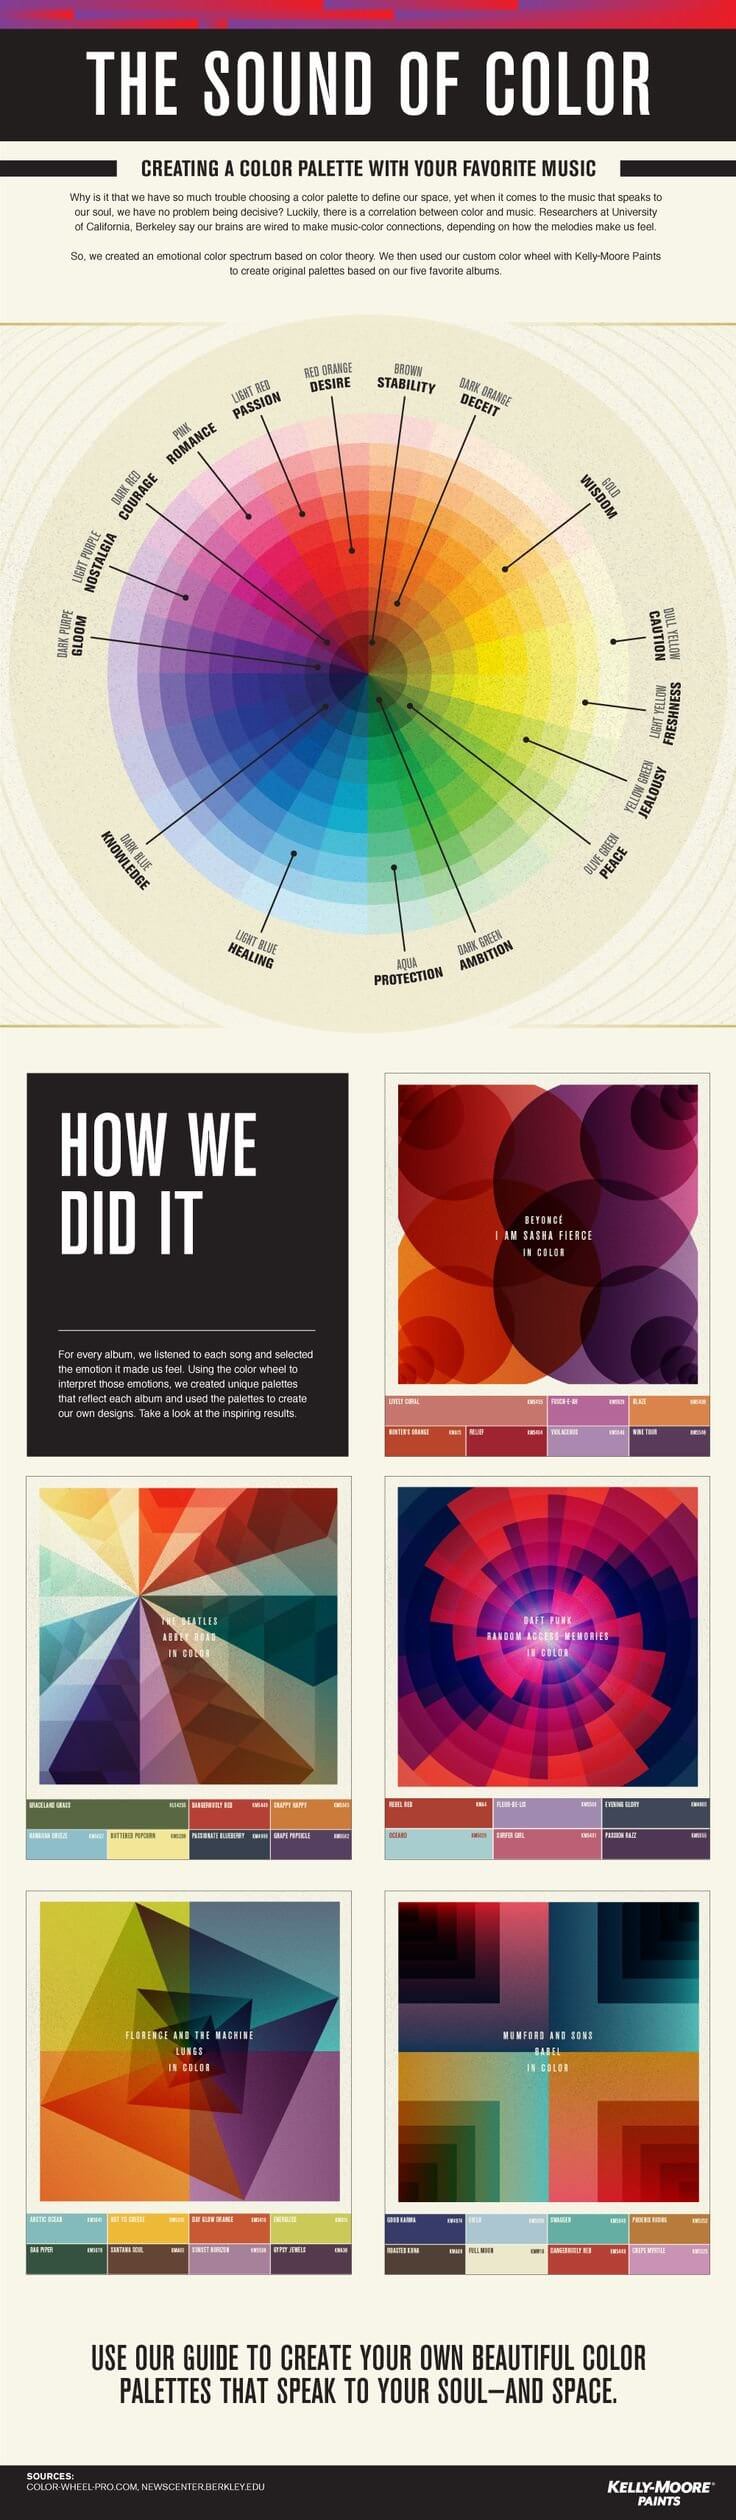 graphic design infographic inspiration